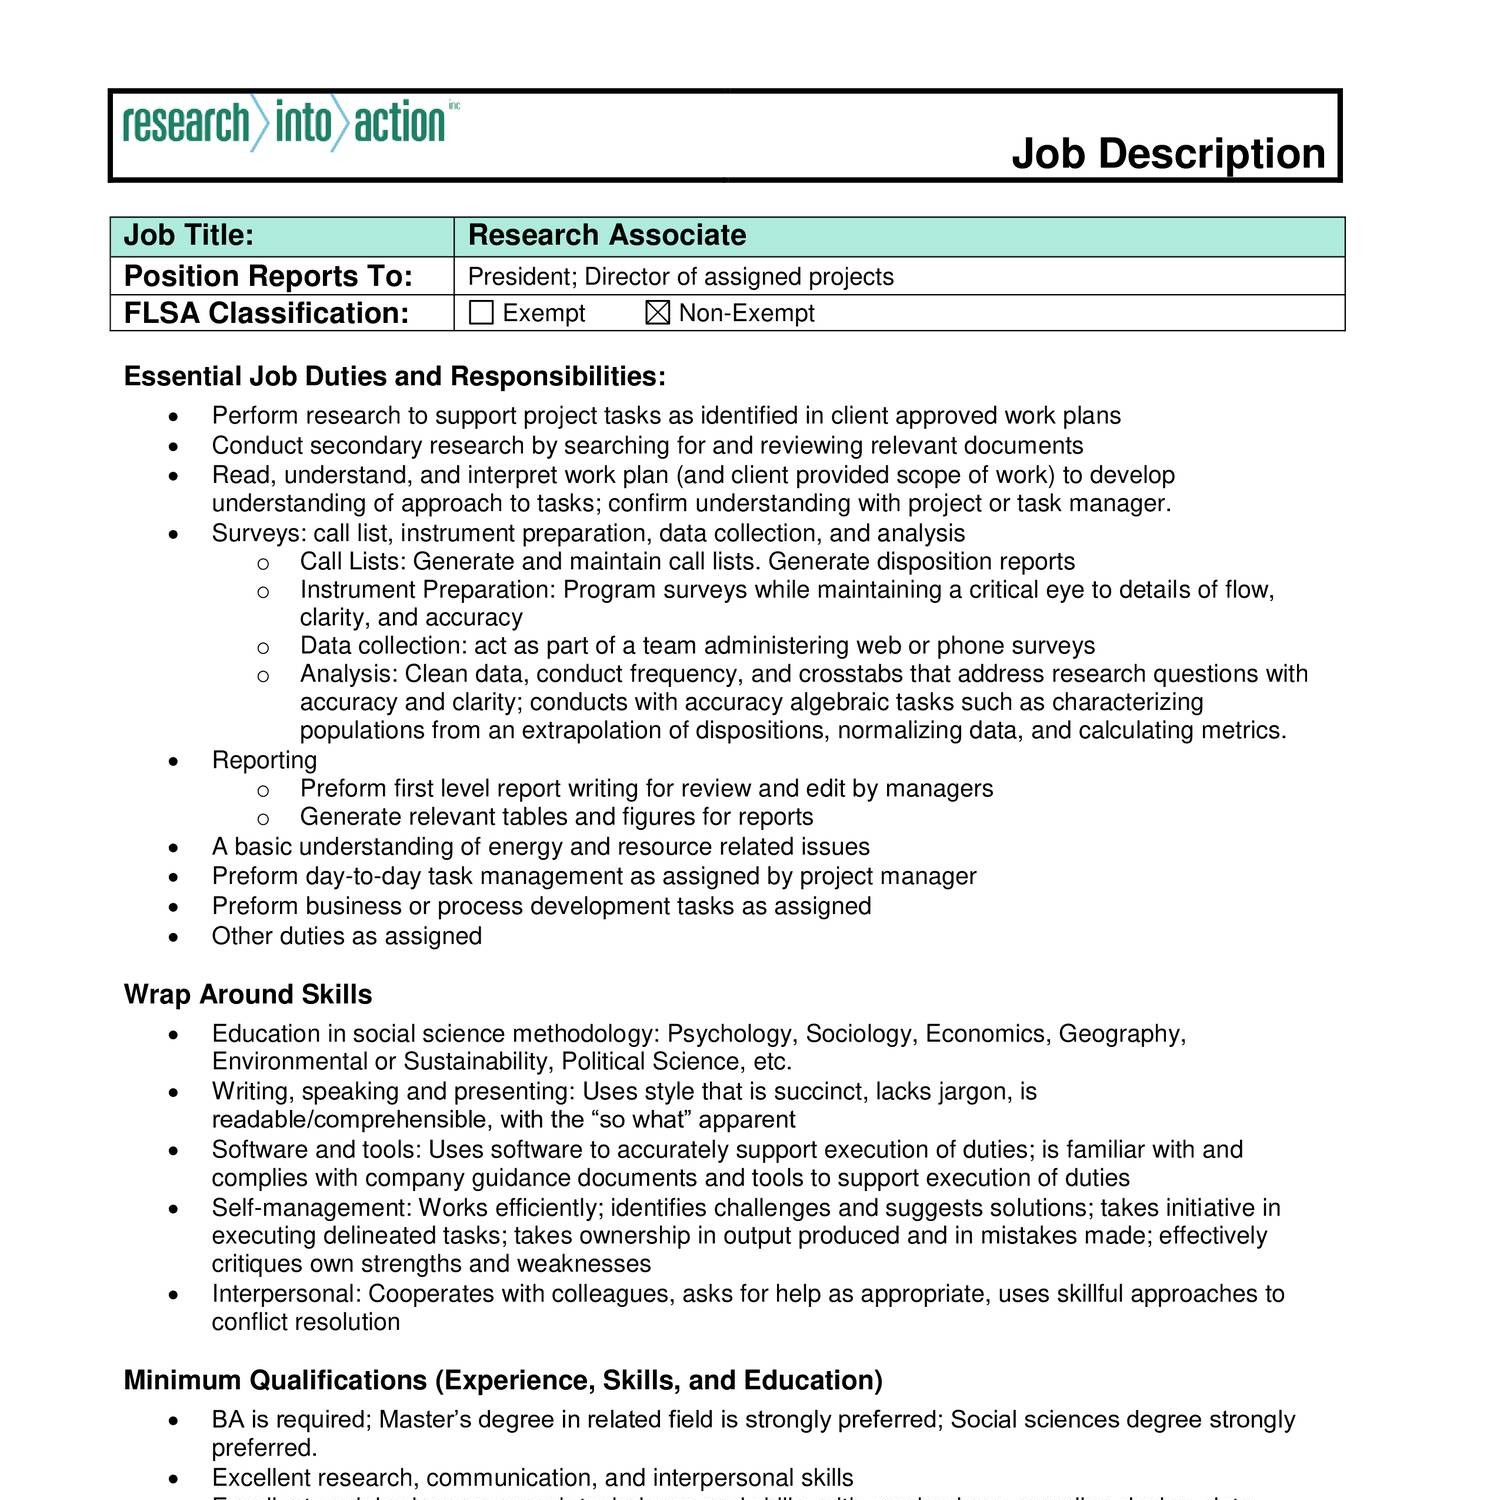 Job responsibilities of research associate